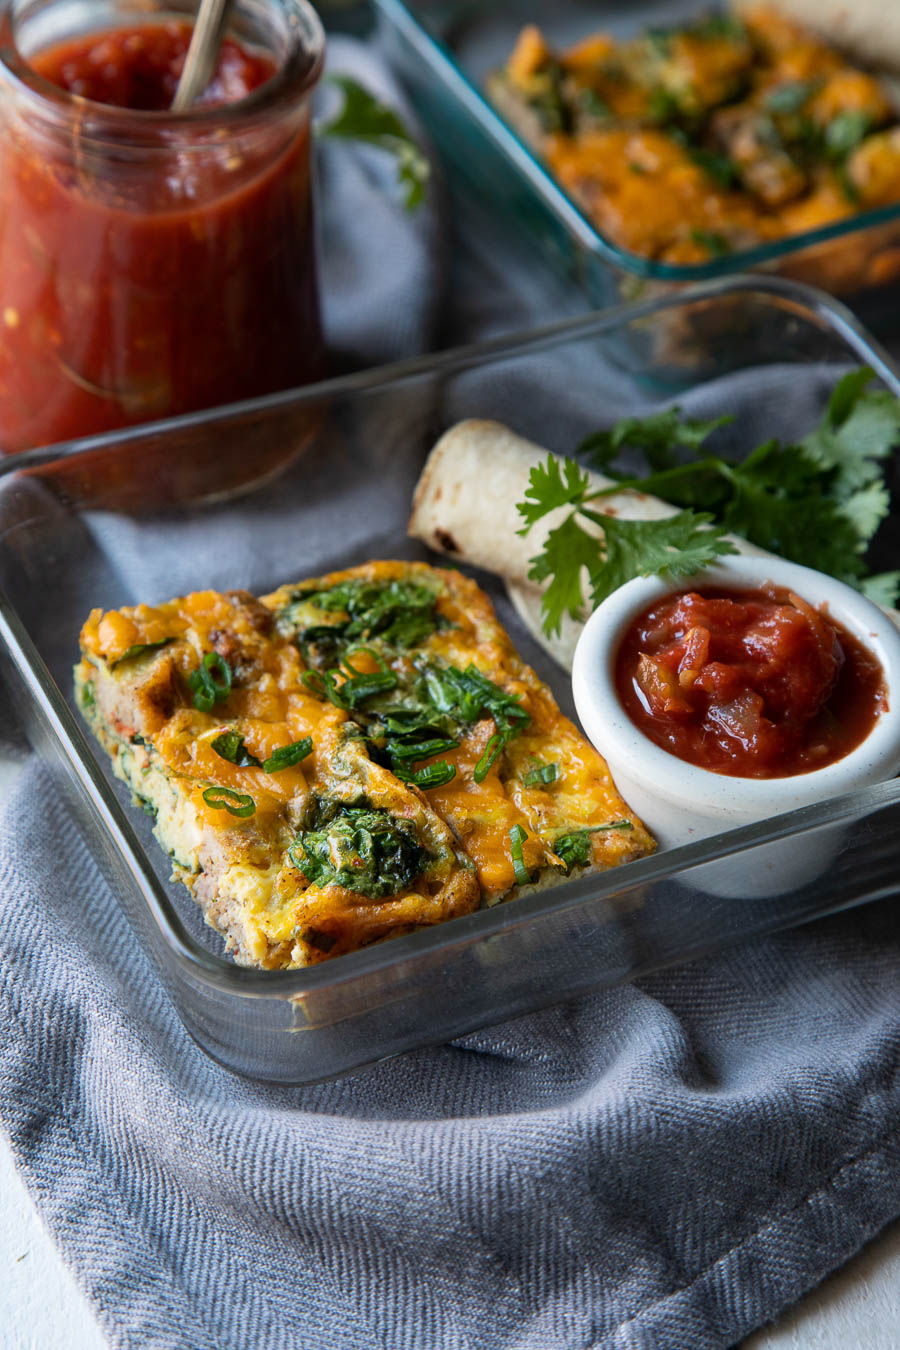 Make Ahead Breakfast Tacos - LowFODMAP Recipe Options